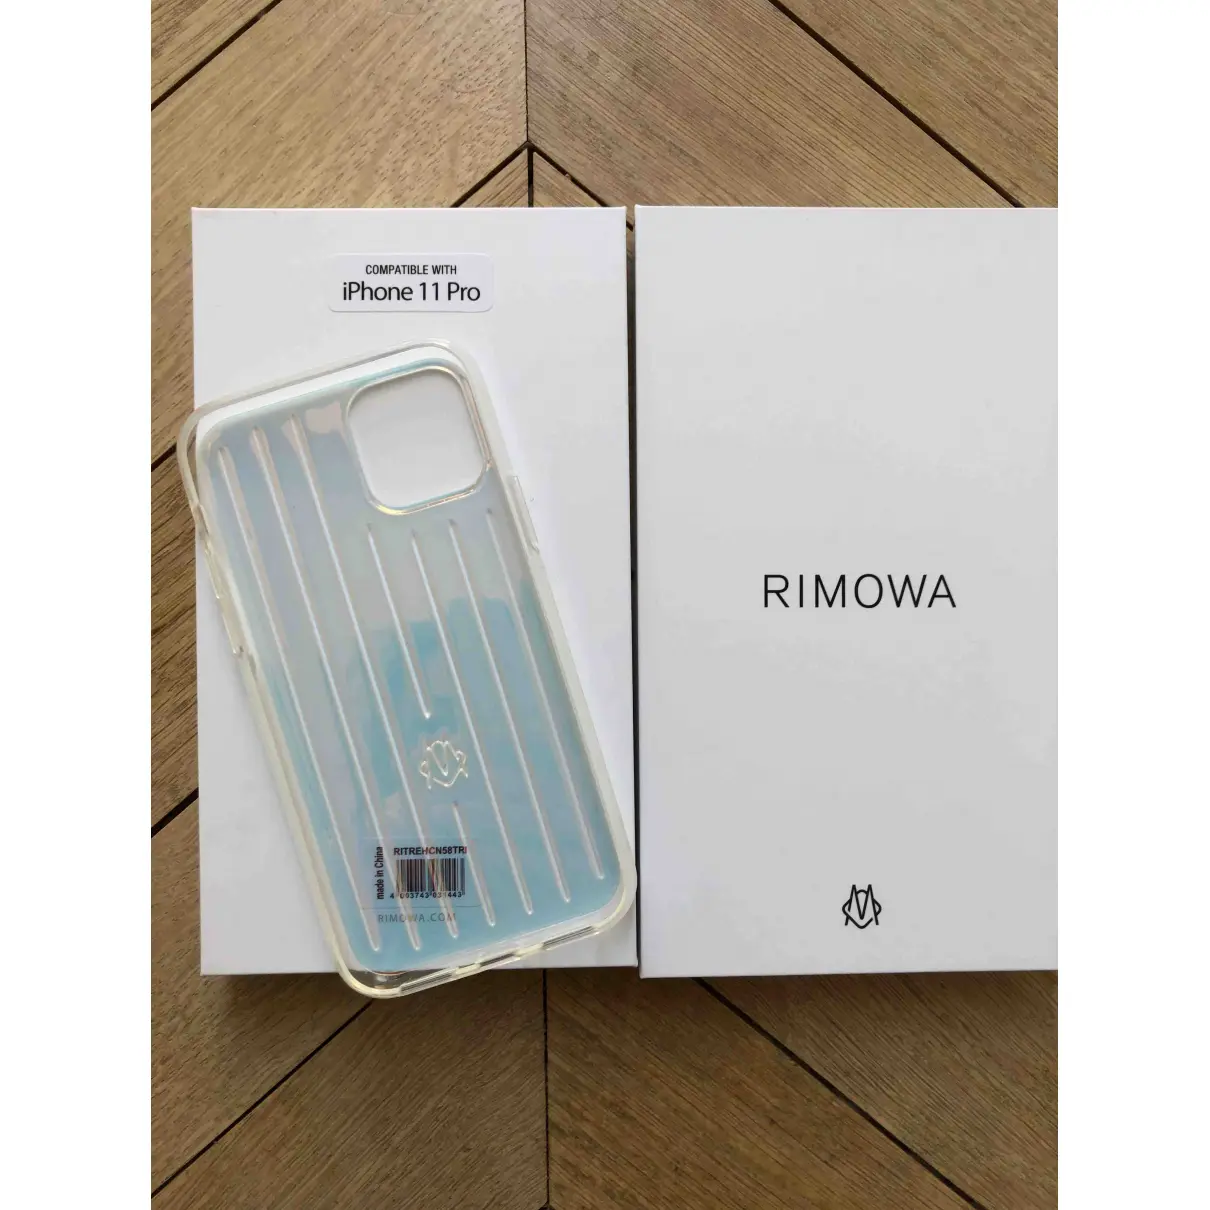 Buy Rimowa Iphone case online